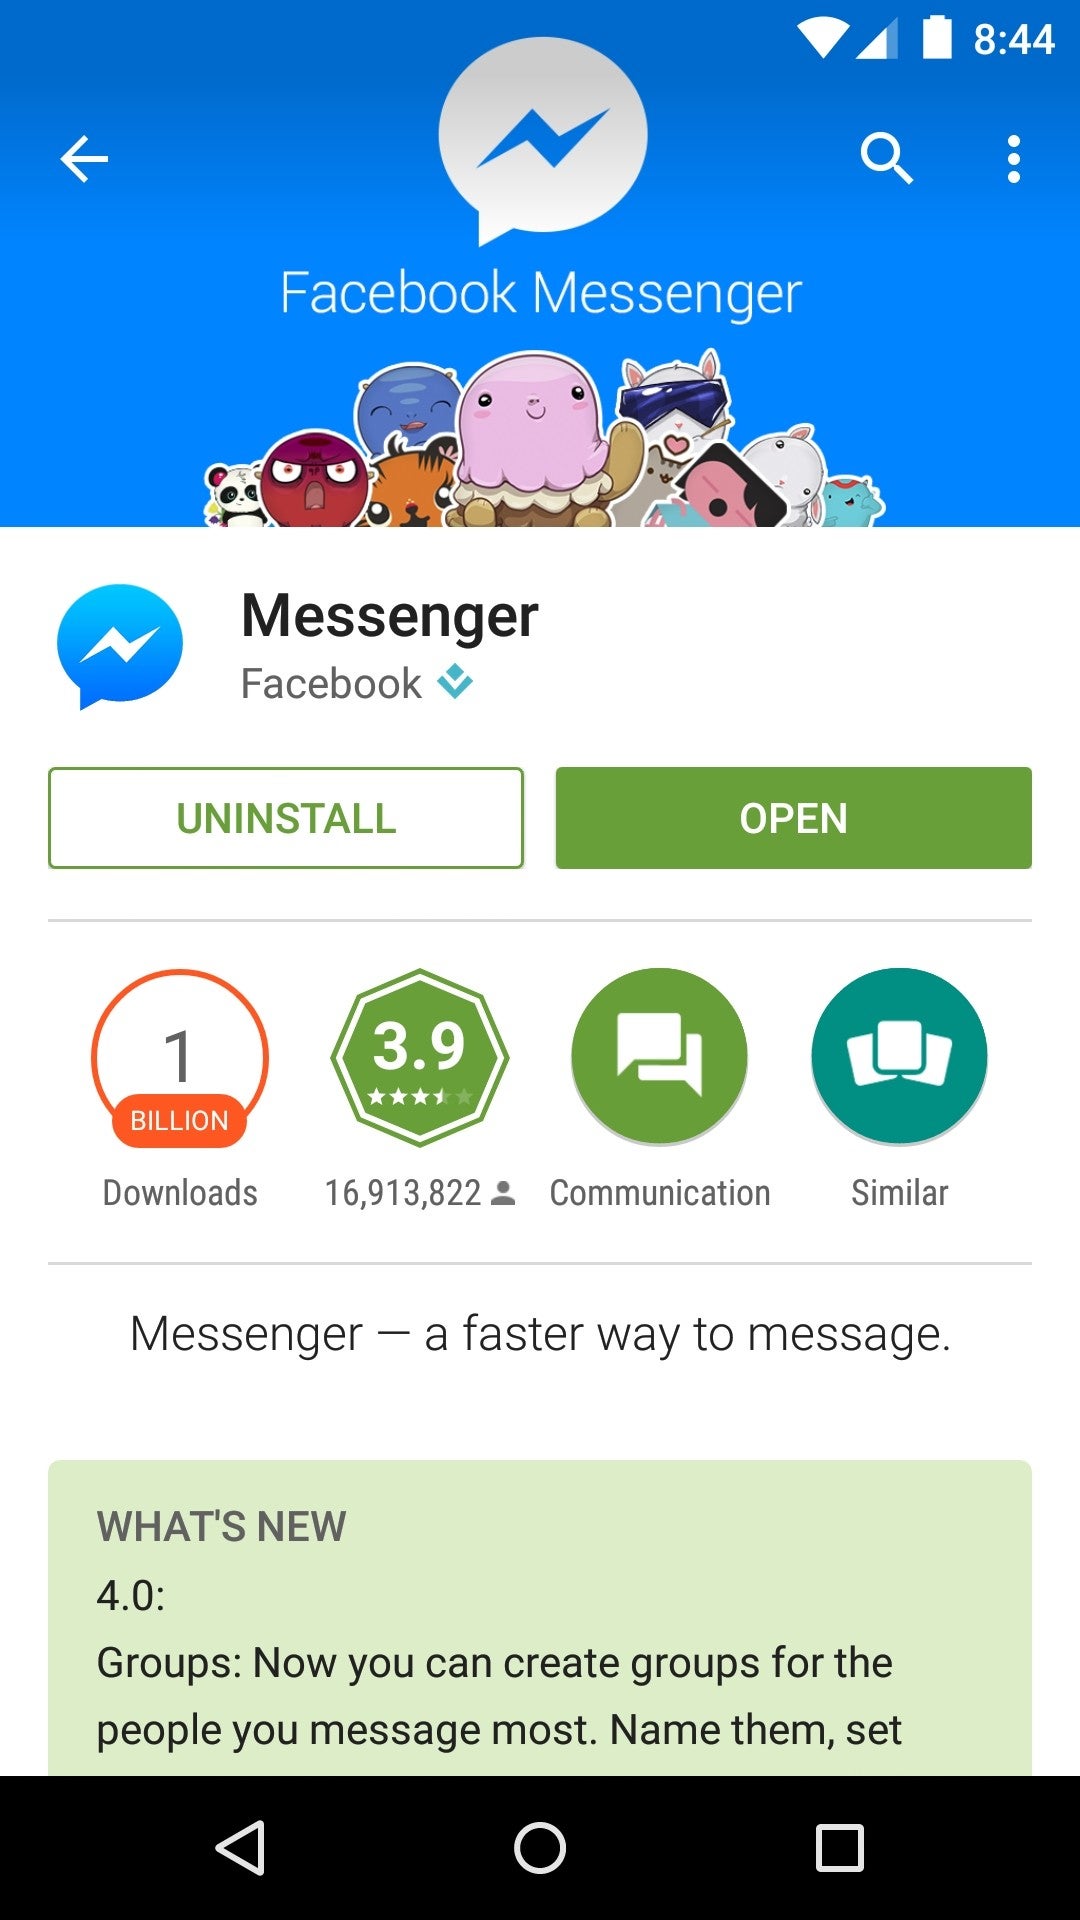 Facebook Messenger for Android hits 1 billion downloads